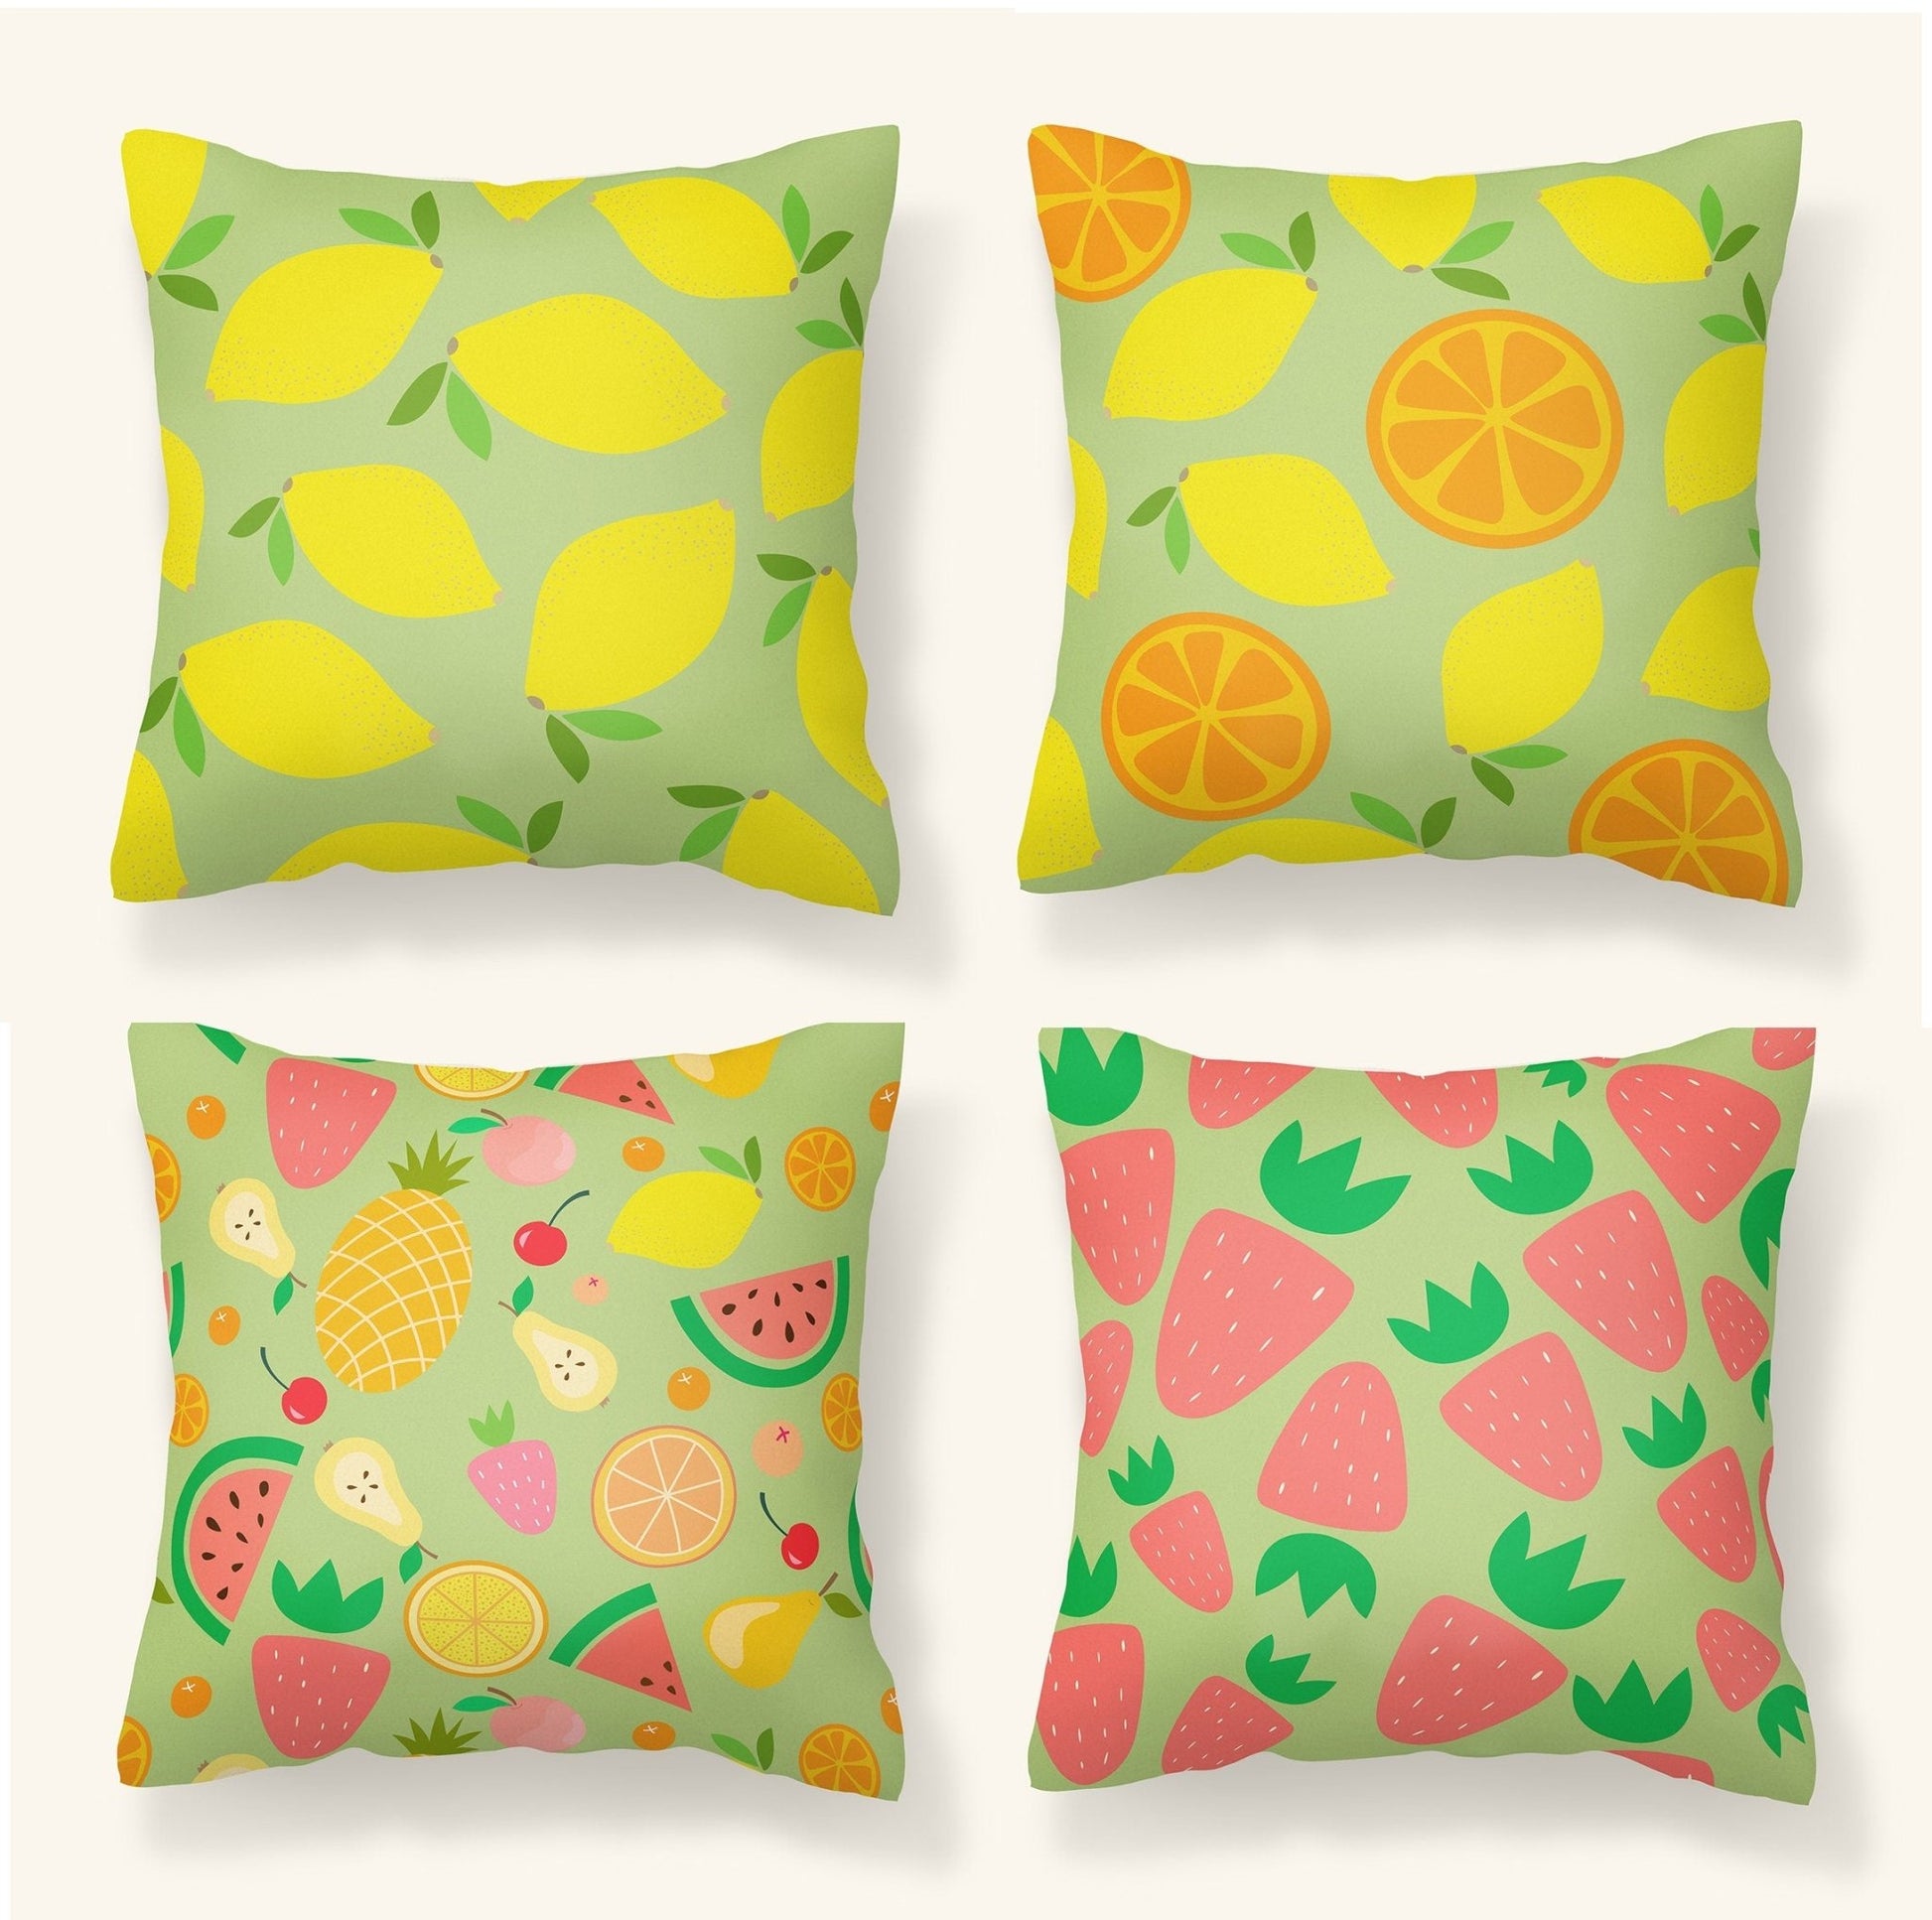 Fruit Pillows - Outdoor, Waterproof Lemon, Orange and Strawberry - Throw Pillows